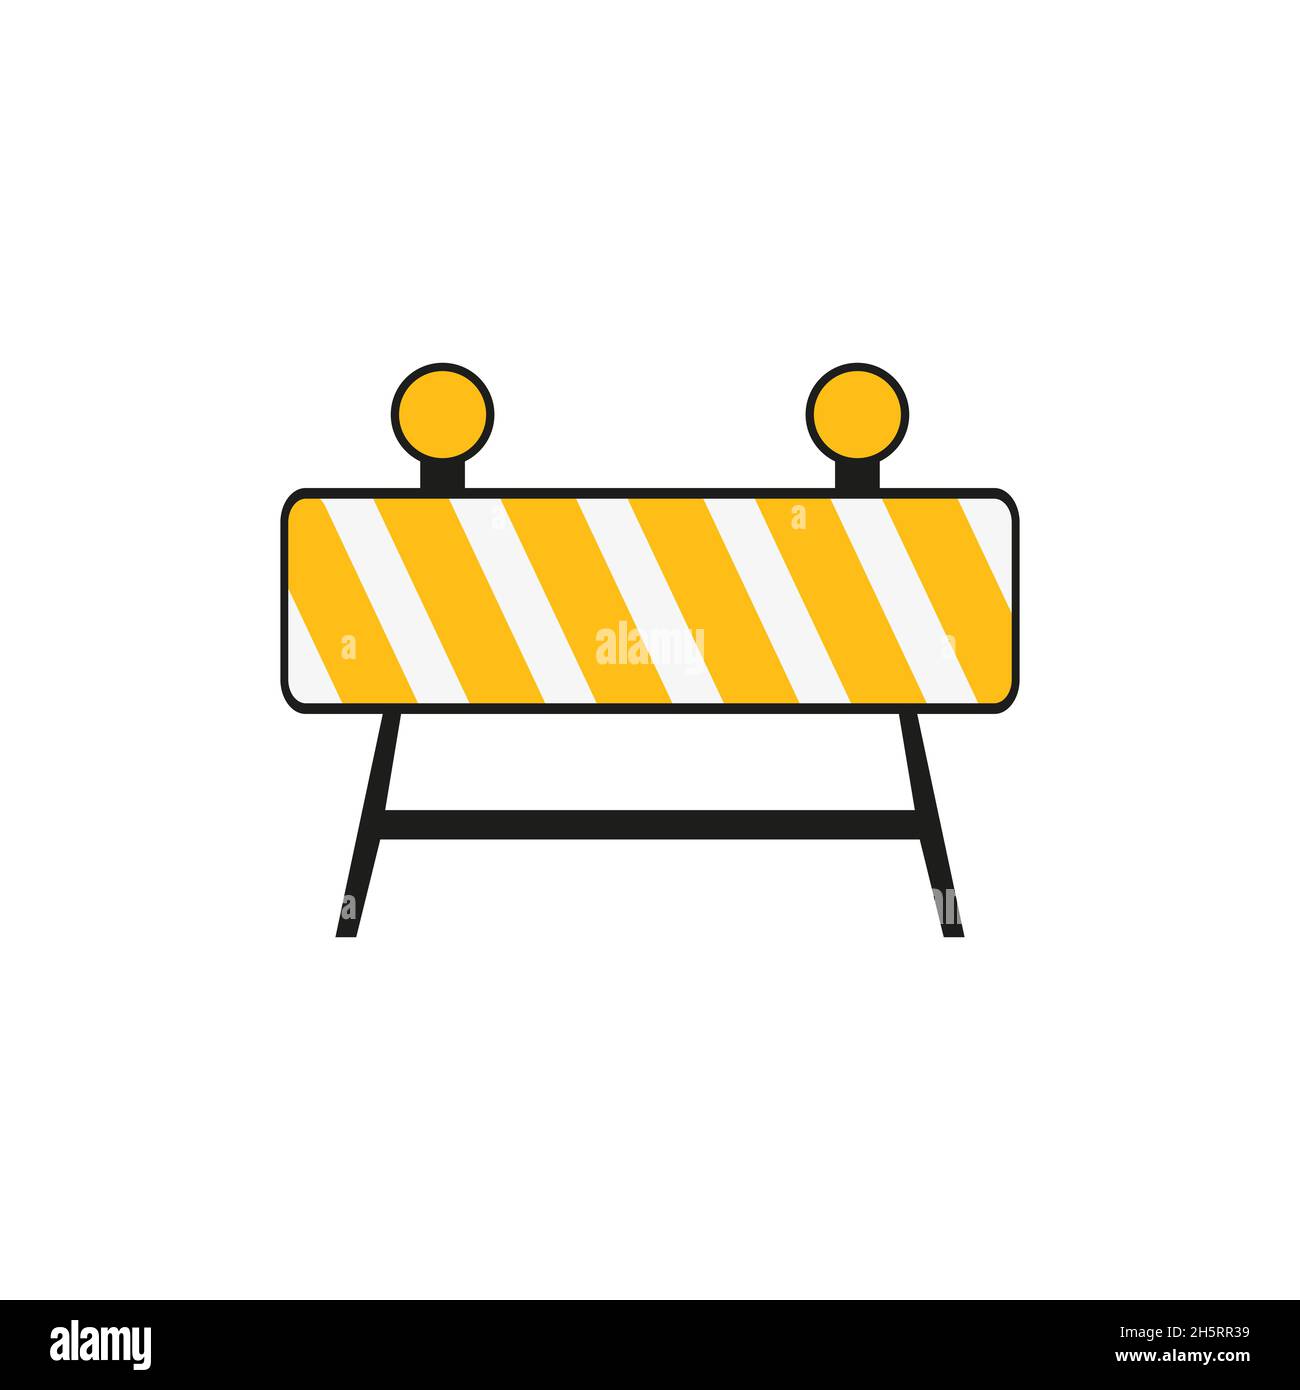 Roadblock hurdle road icon illustration for web design. Isolated vector Stock Vector